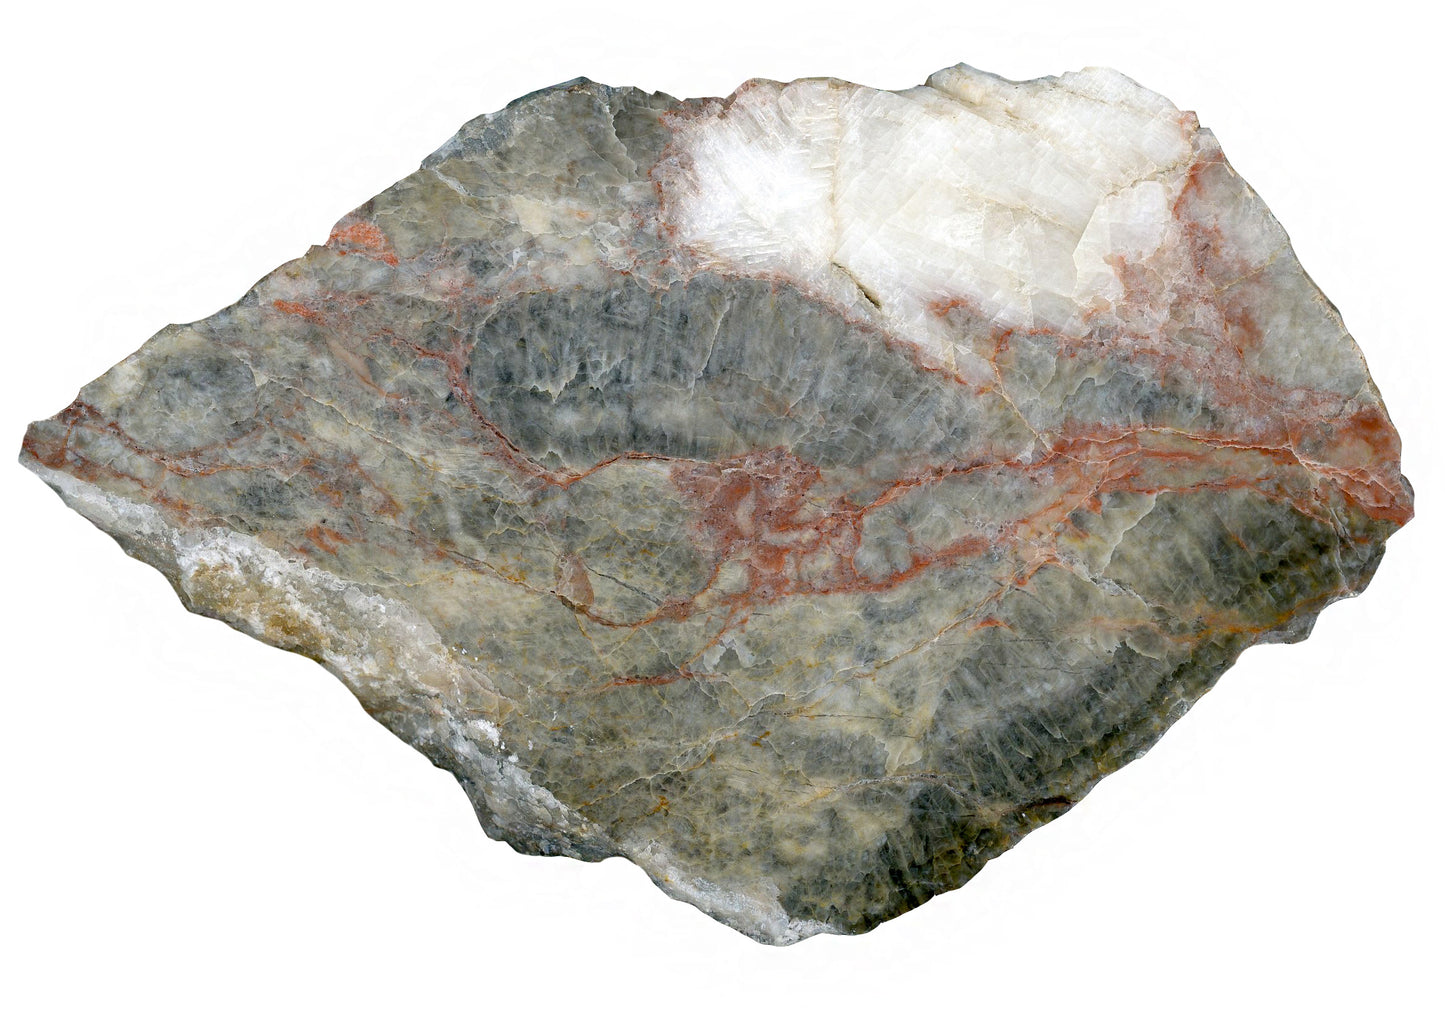 Vilémovice limestone with a Neptunian vein